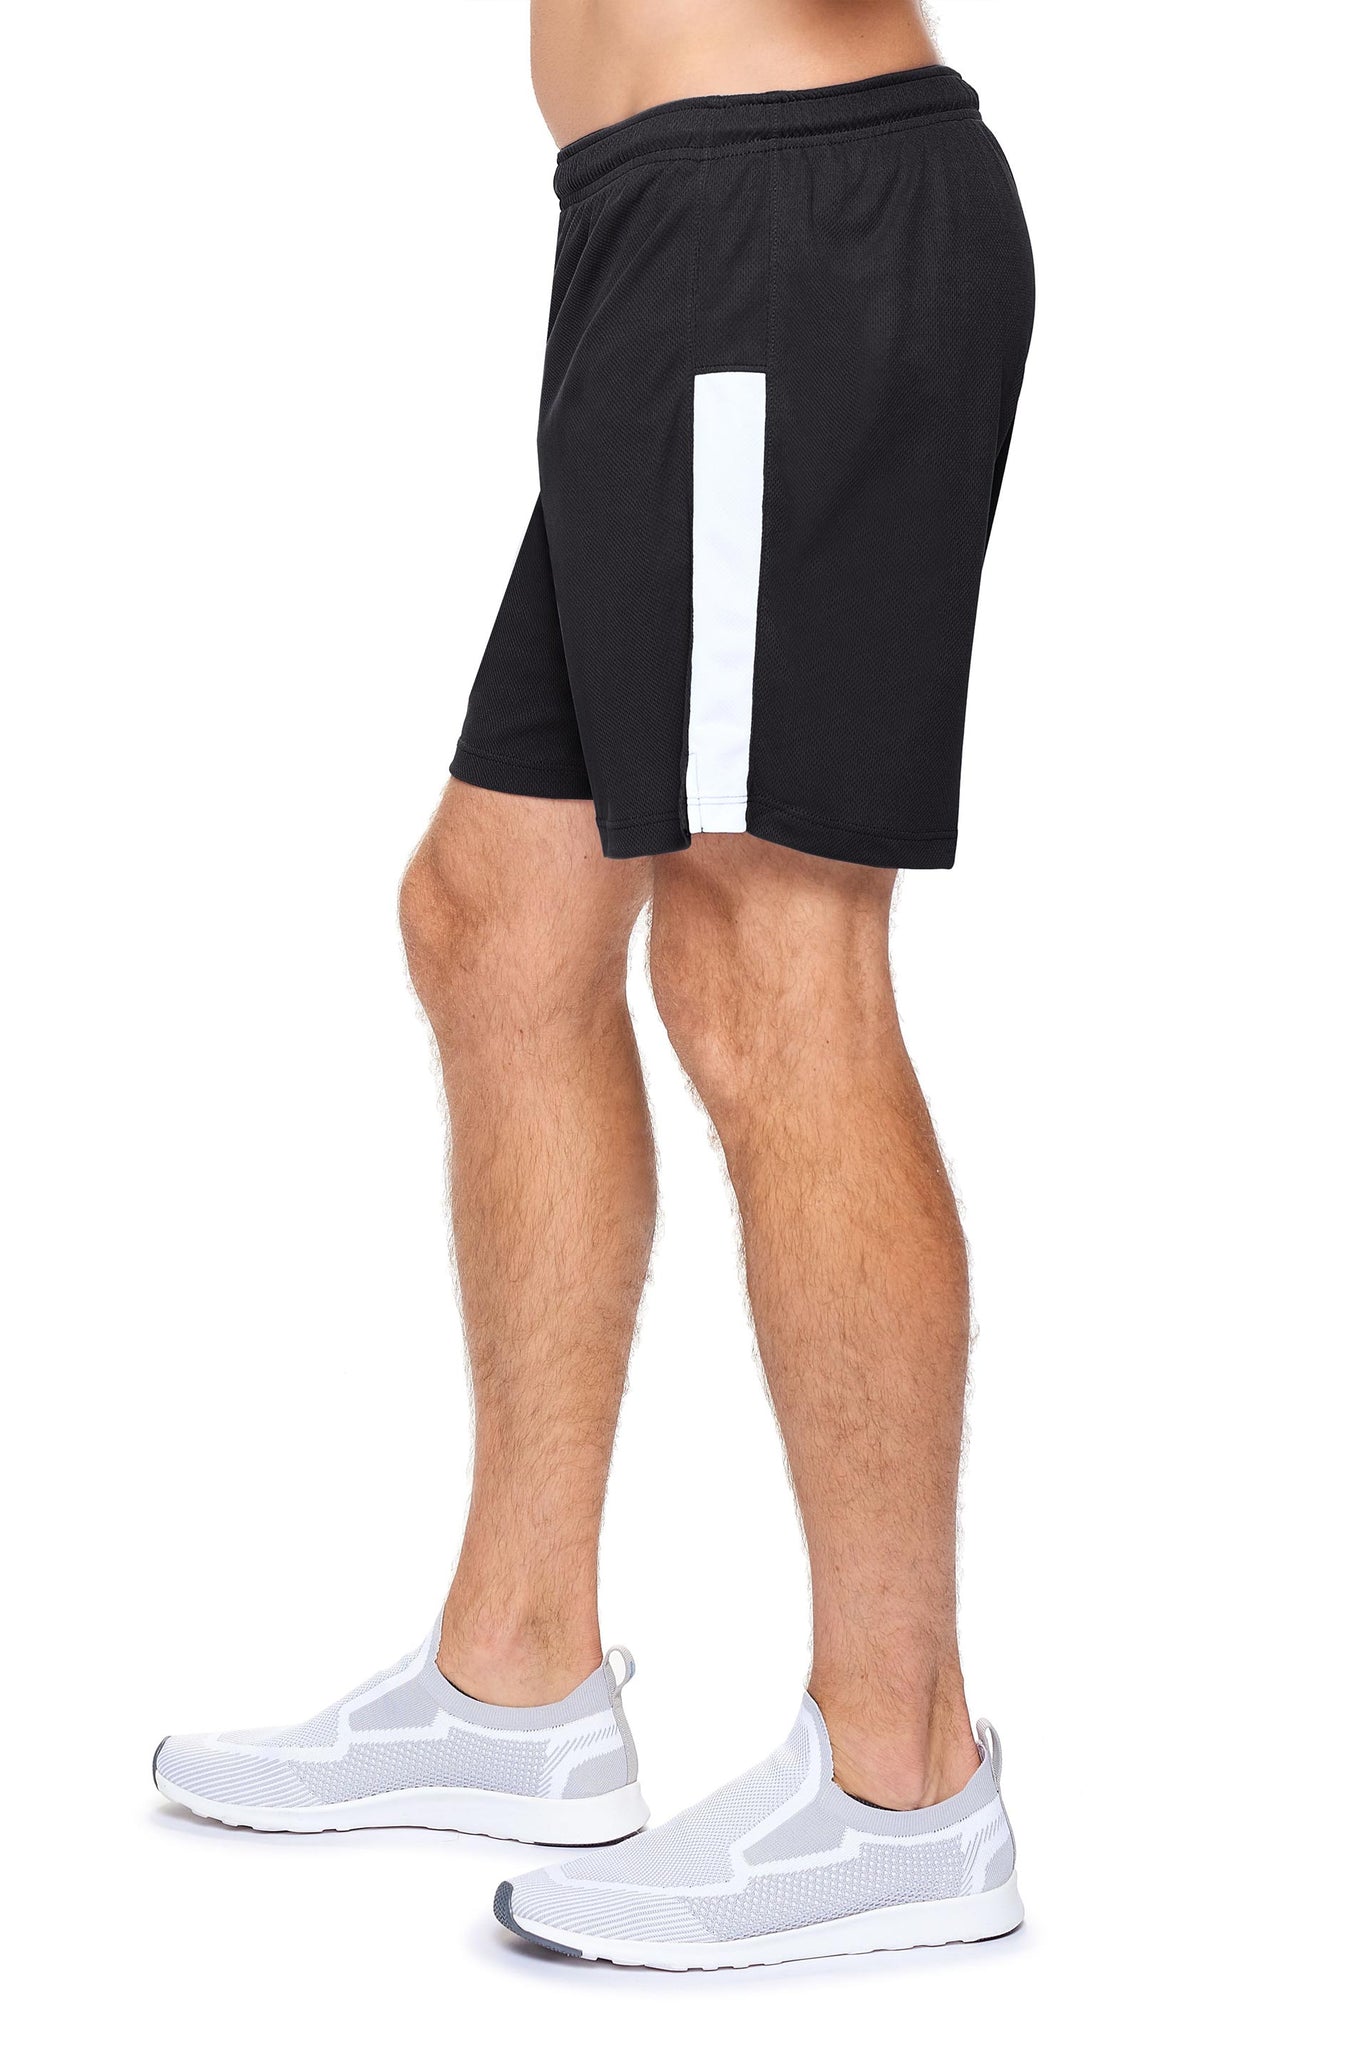 AJ1090🇺🇸 Oxymesh™ Premium Shorts - Expert Brand #BLACK